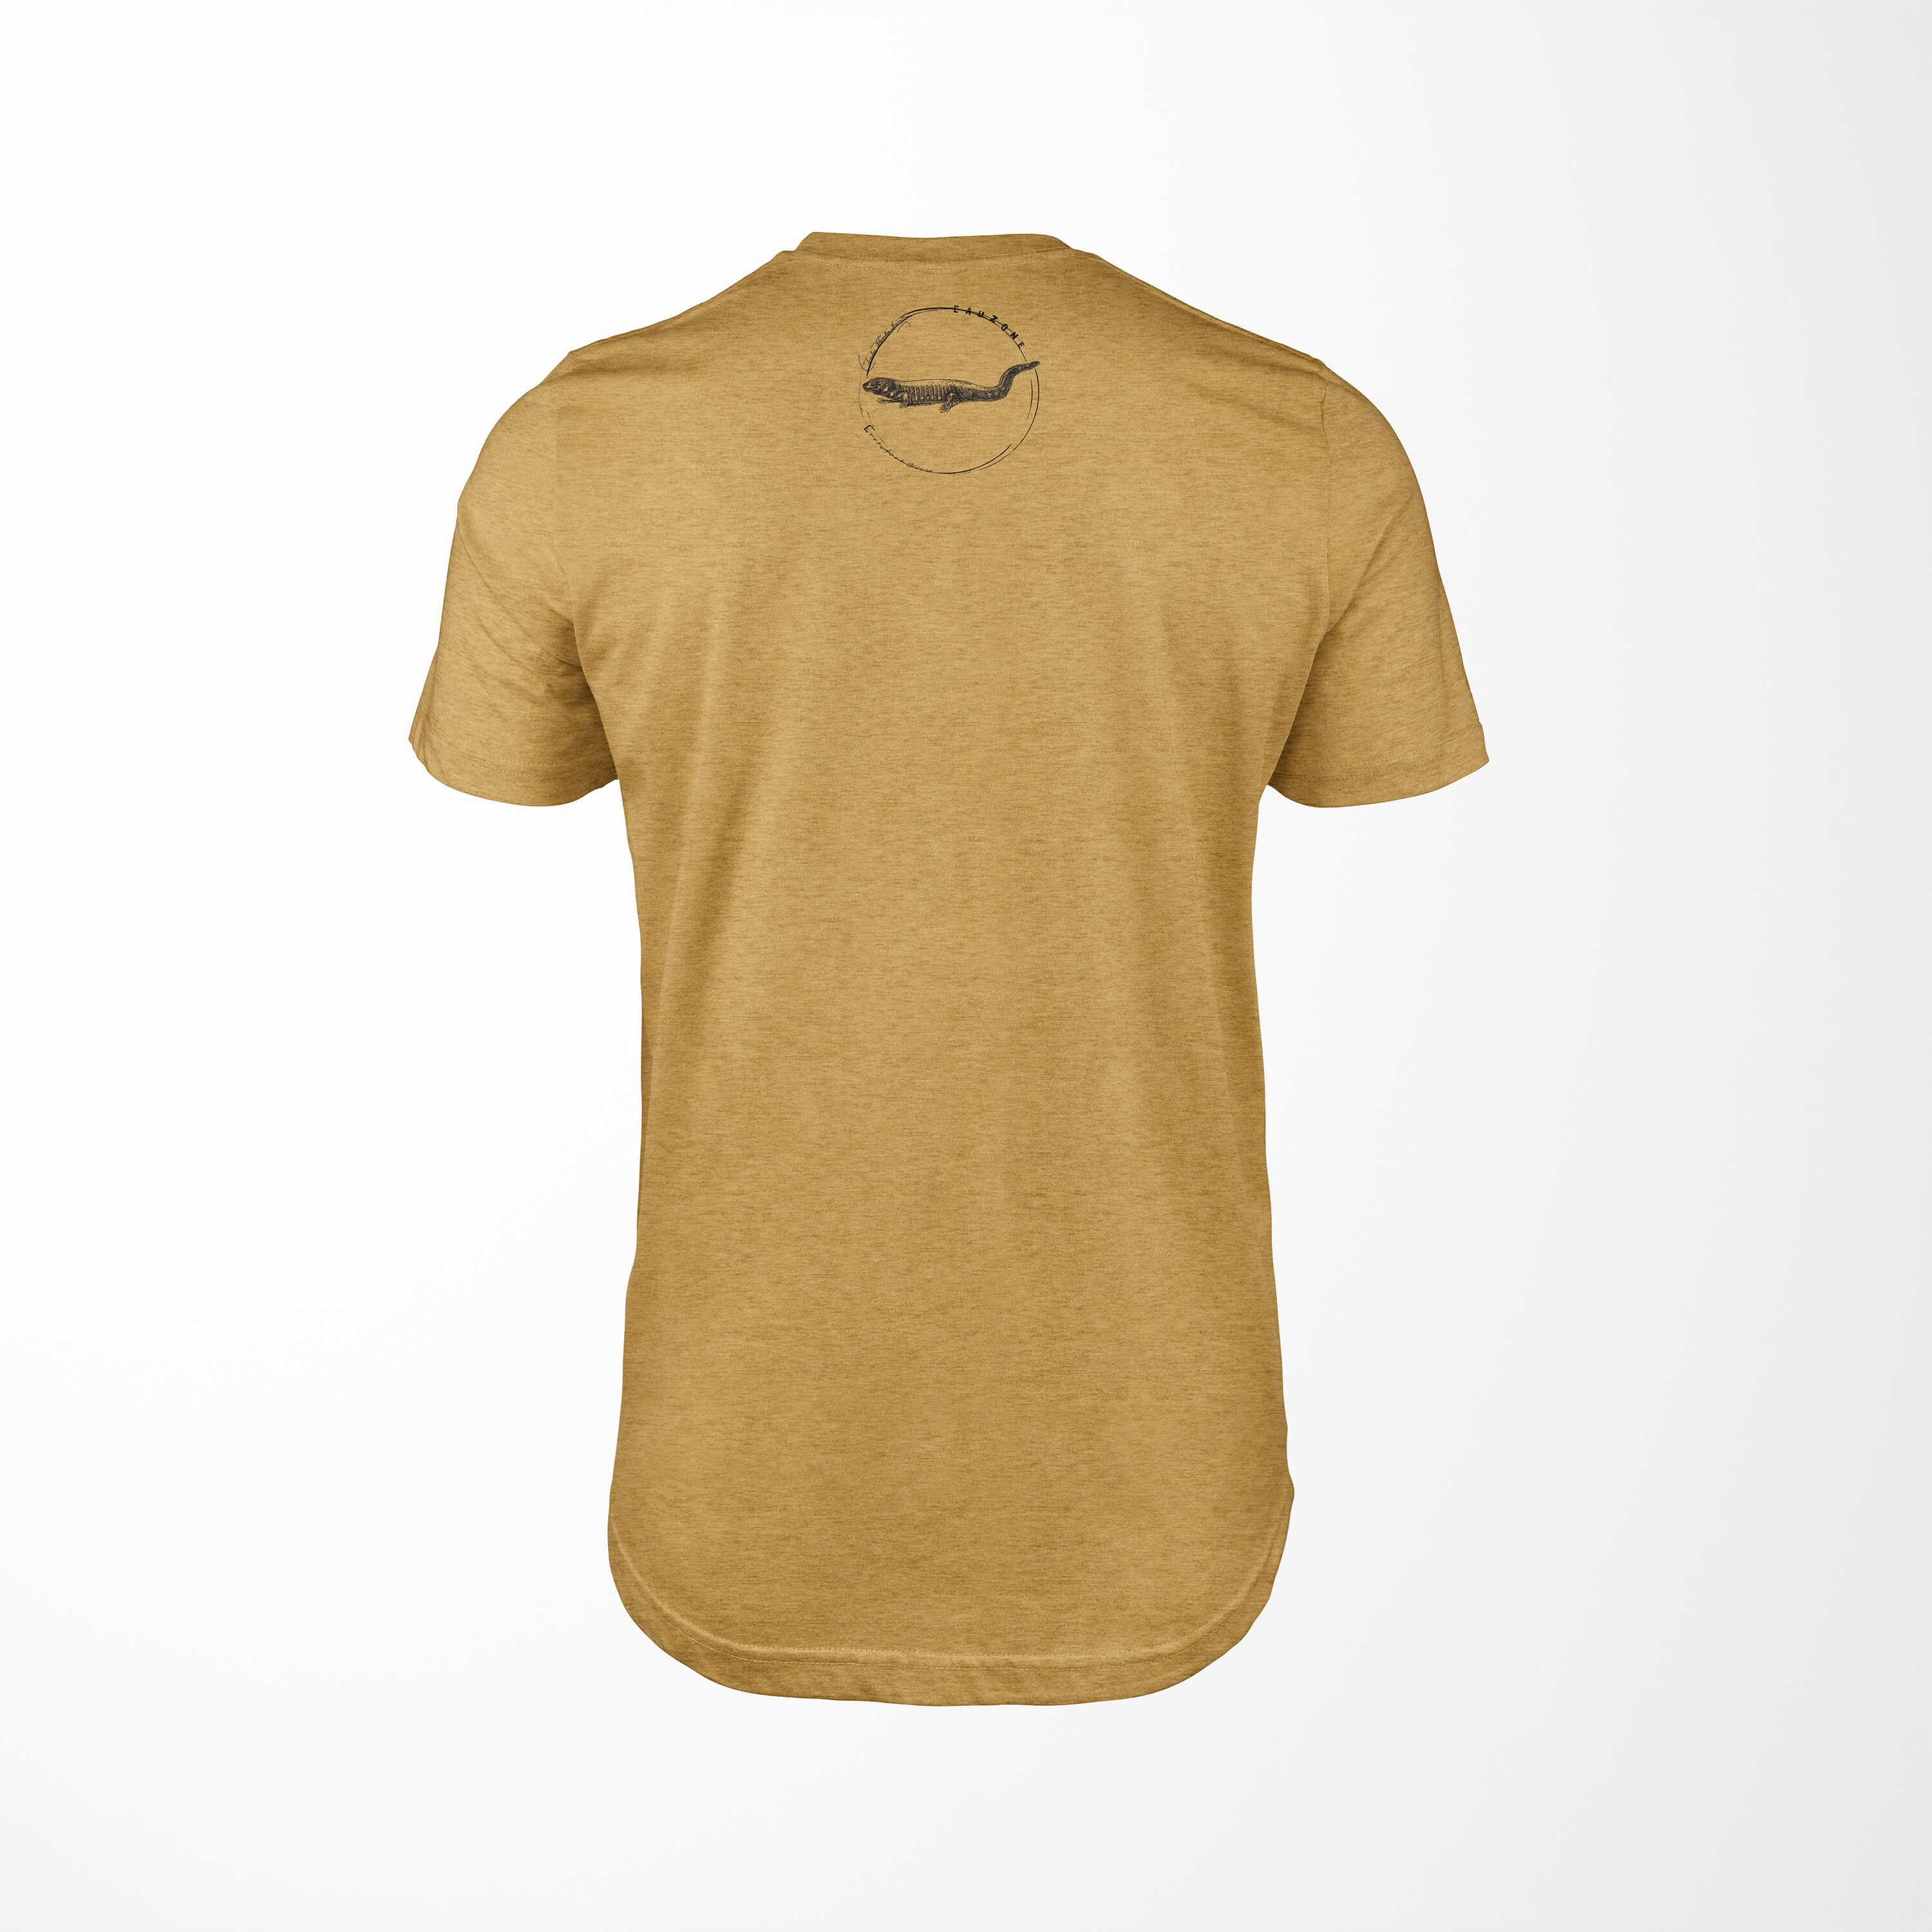 T-Shirt Amblystoma T-Shirt Antique Gold Art Evolution Sinus Herren